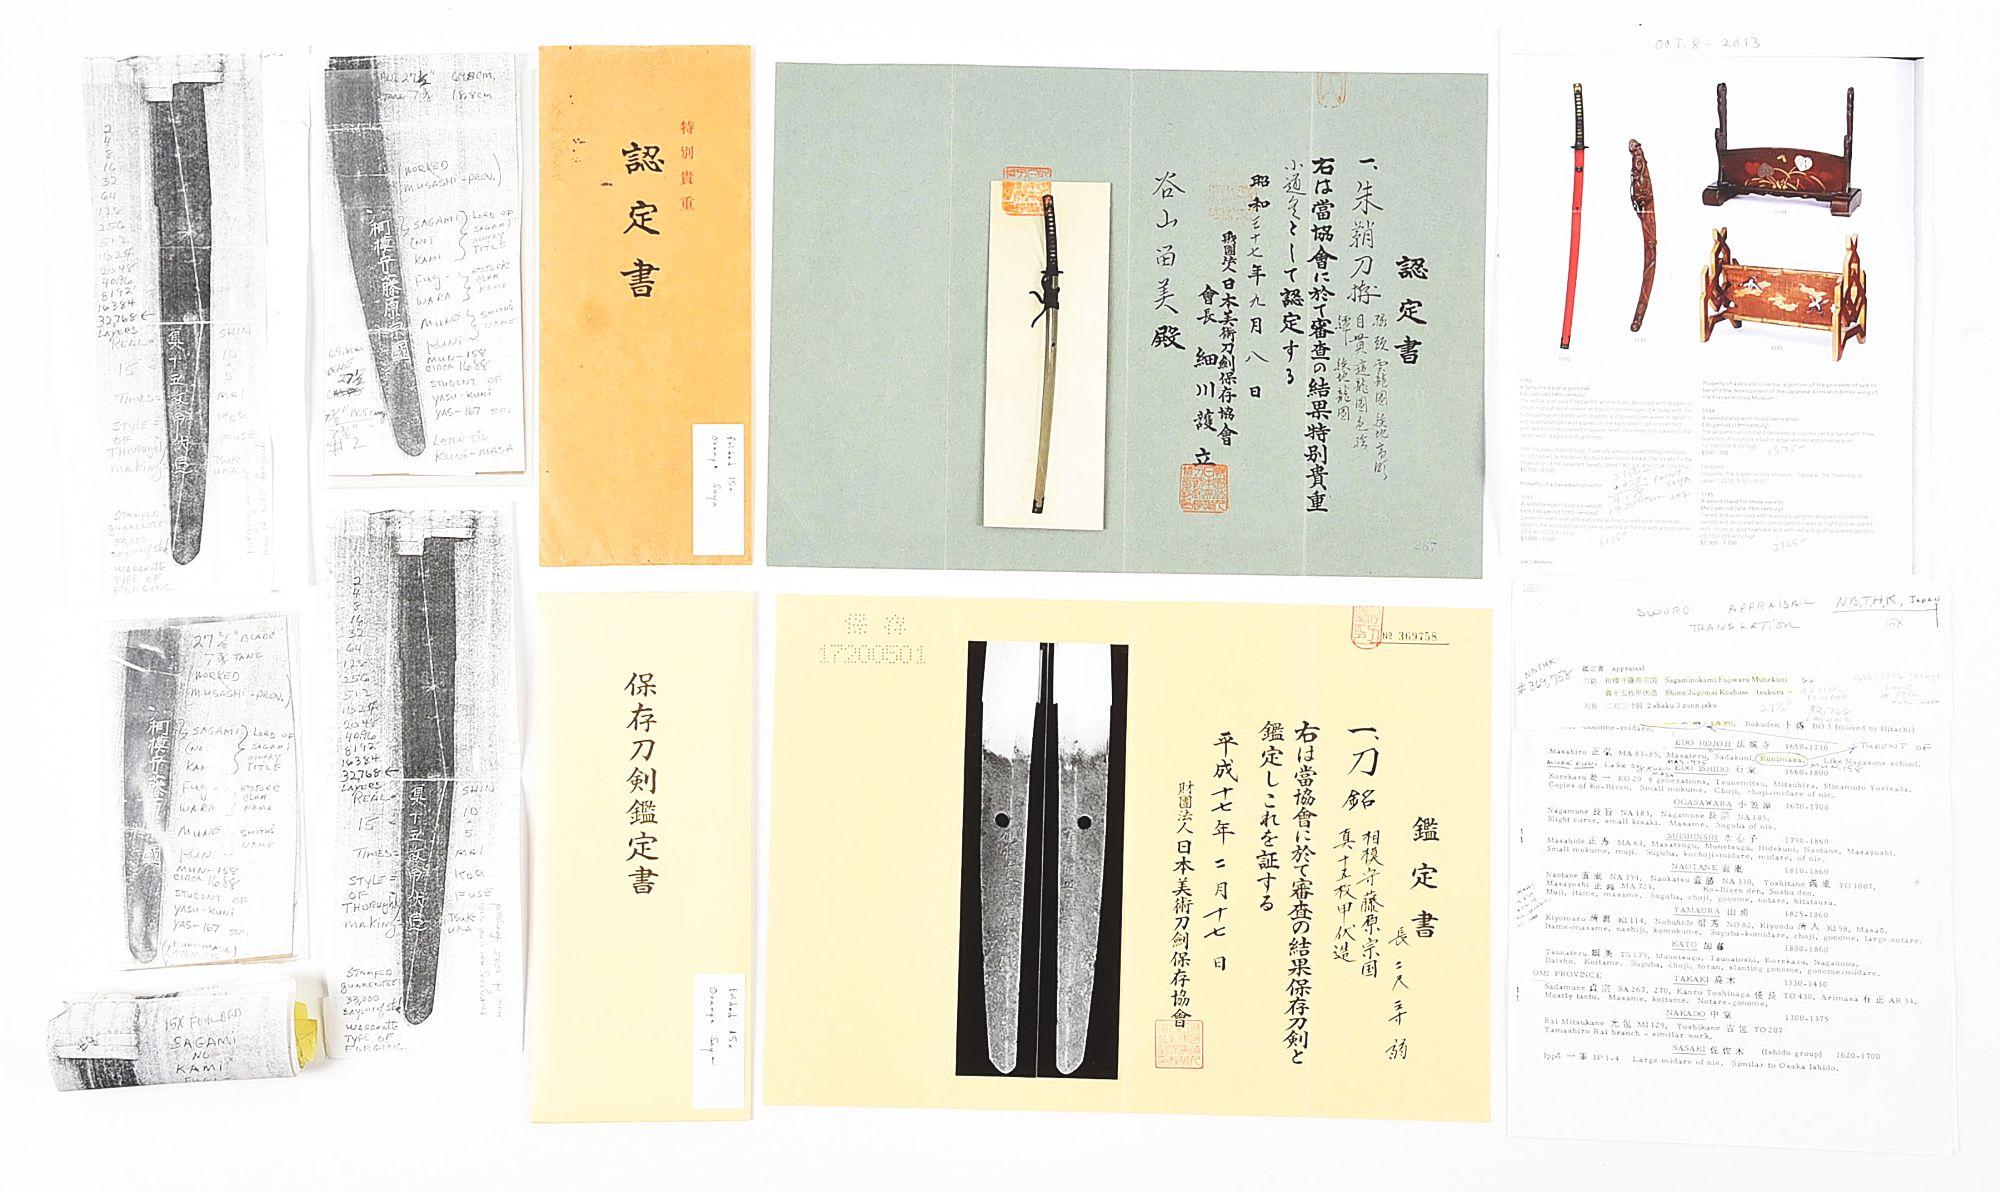 AN IMPORTANT KATANA BY SAGAMI MUNEKUNI WITH 15 FOLD GUARANTEE INSCRIPTION, TOKUBETSU KICHO PAPERS FO